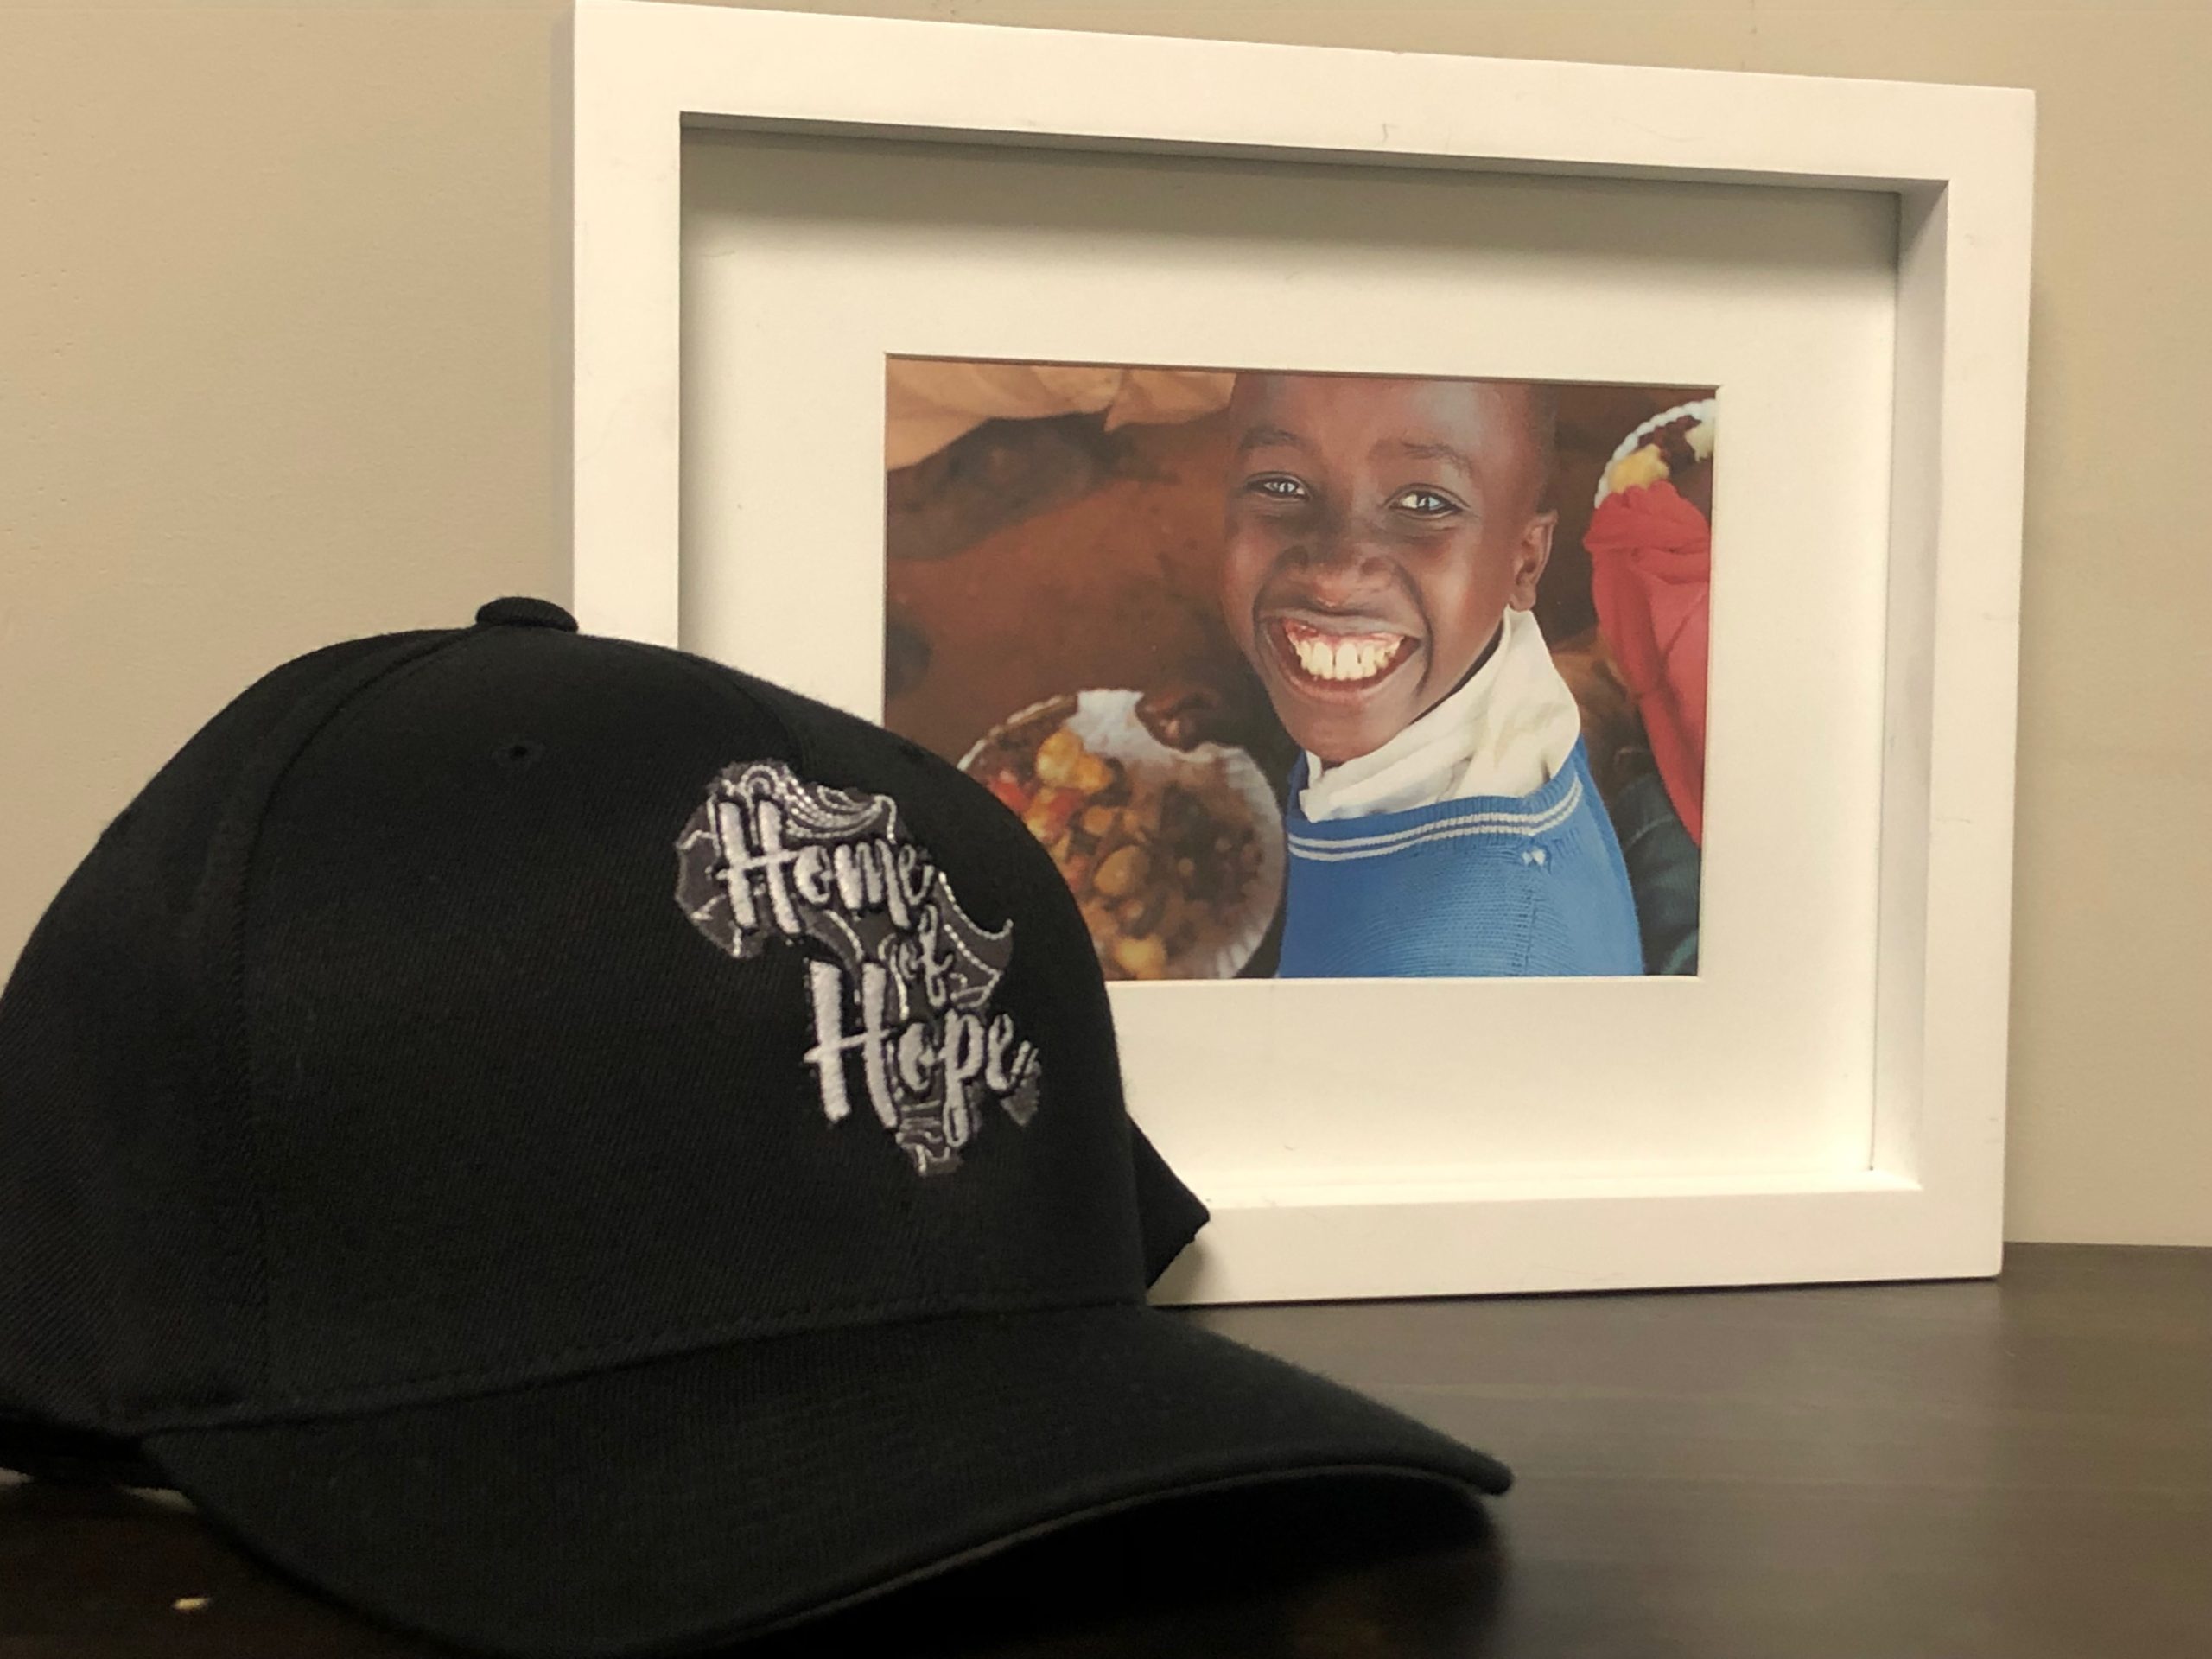 homeofhope home of hope hat black logo merch product merchandise donate donation sponsor sponsorship help donations child health cards healthcard feeding program